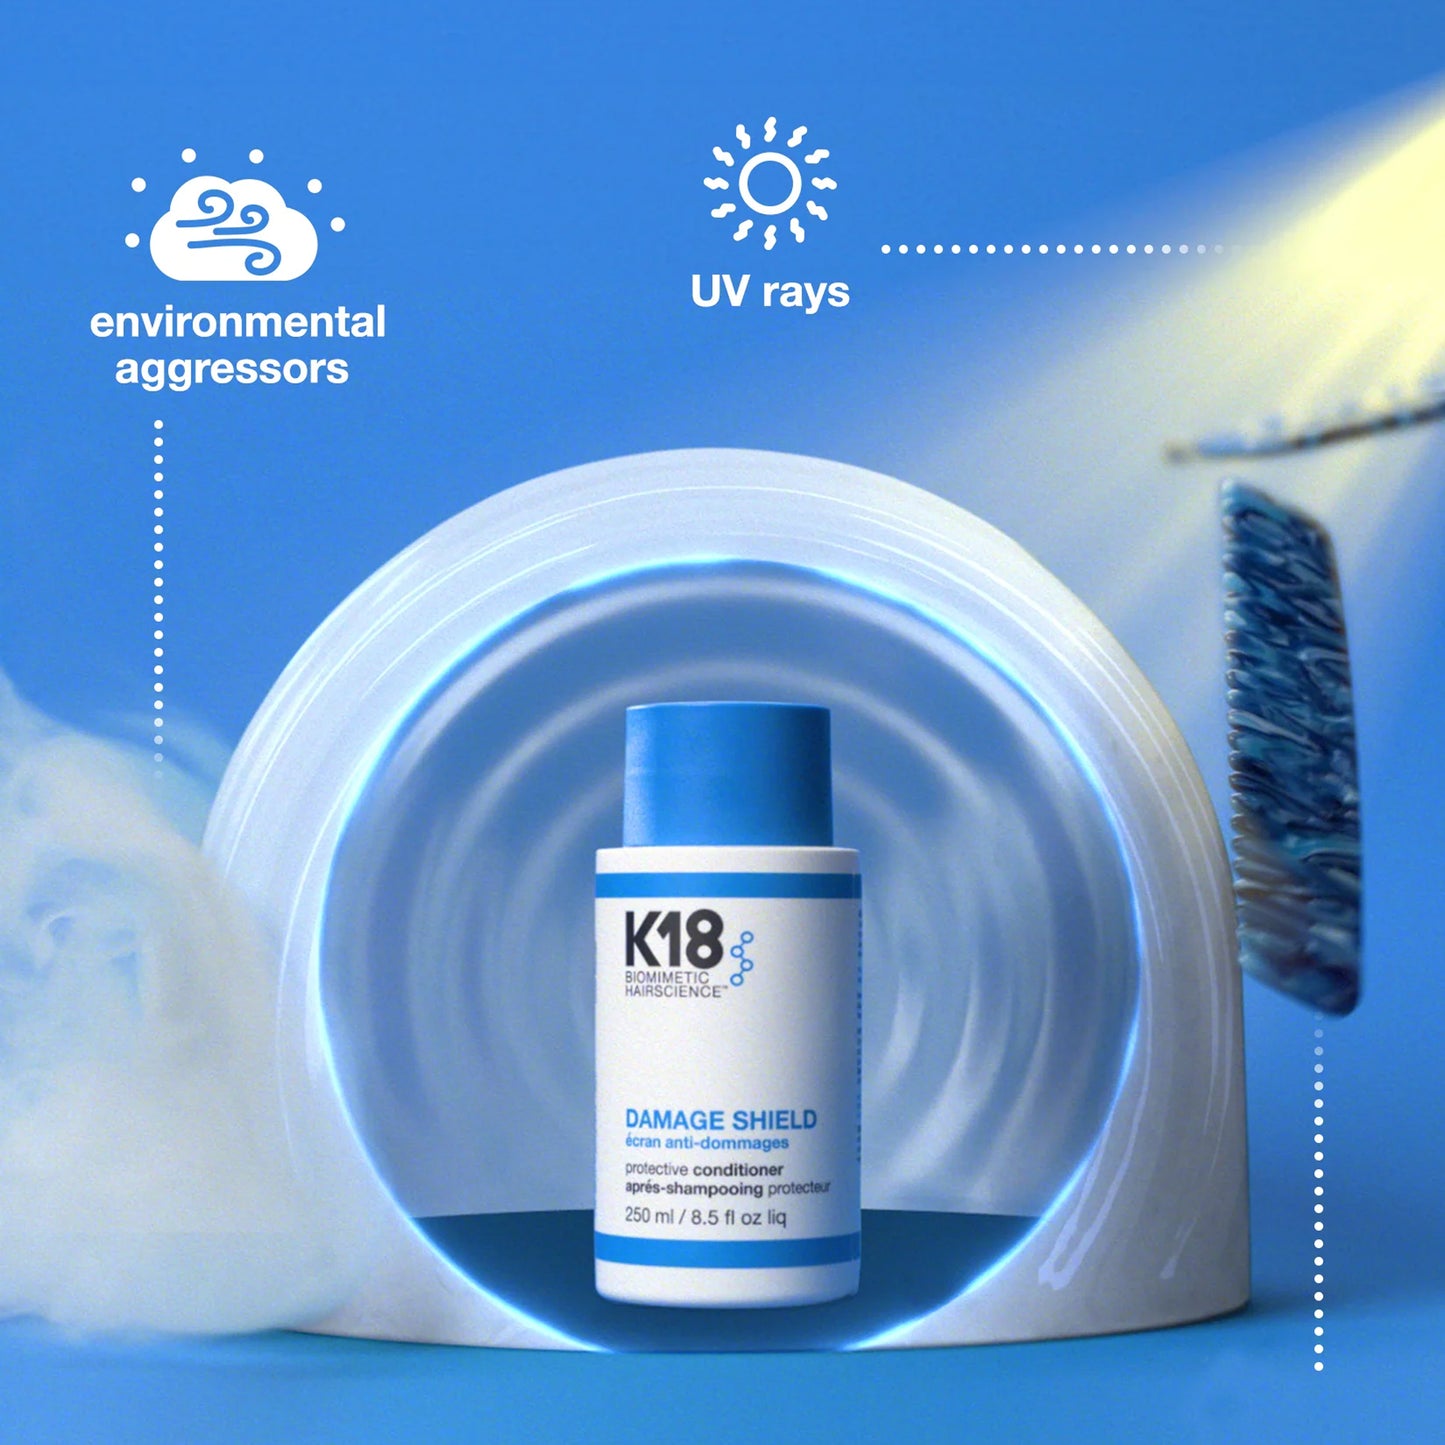 K18 Damage Shield Protective Conditioner 250 mL